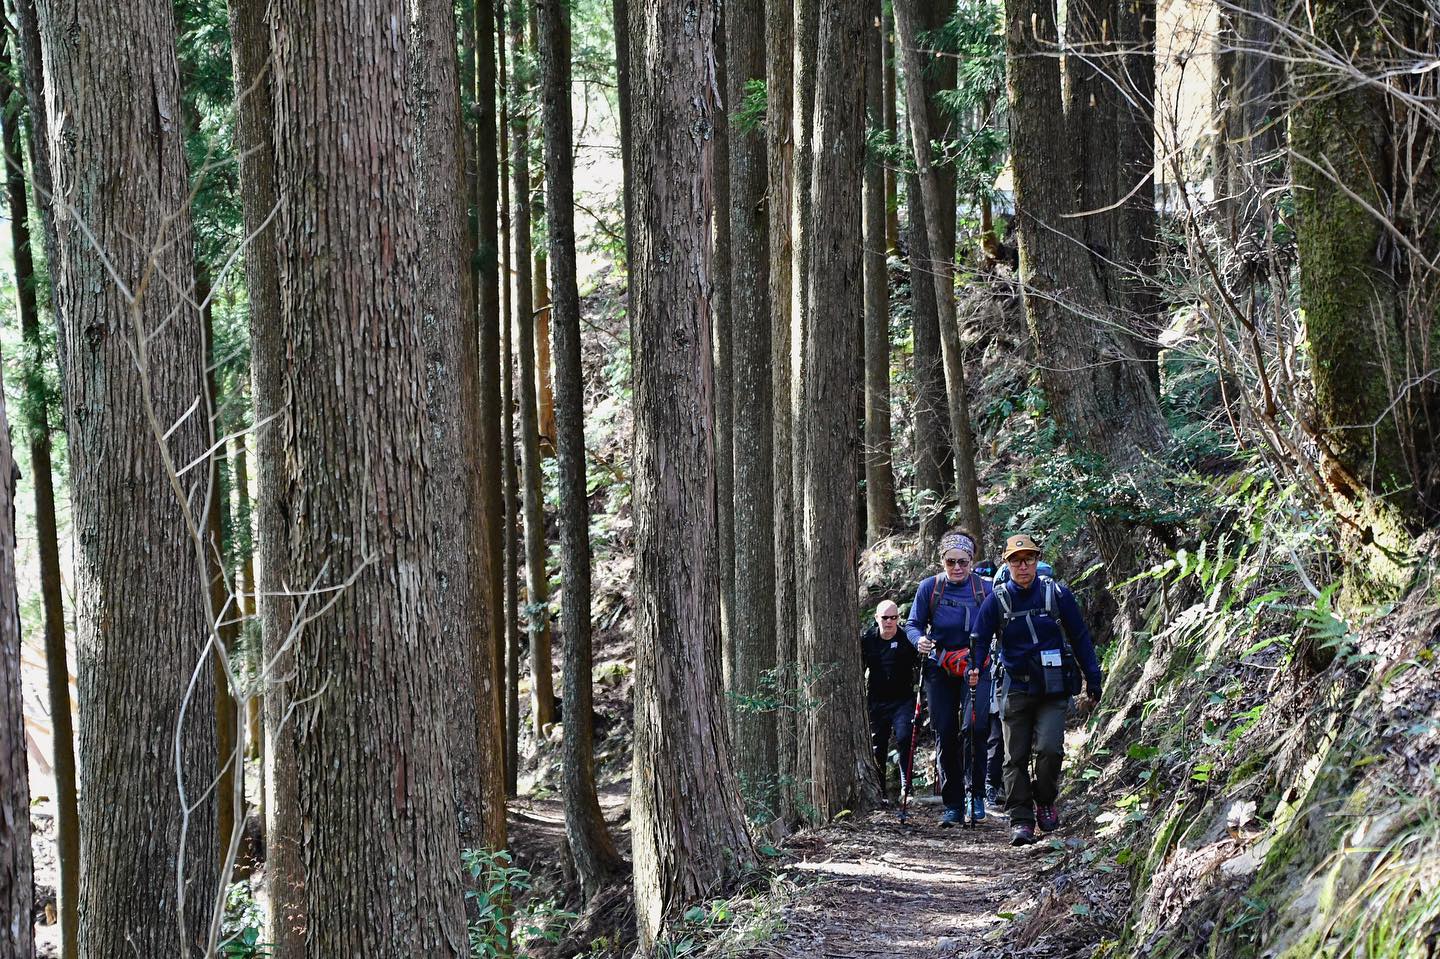 Embark on a journey of spiritual discovery on our KUMANO-KODO Pilgrimage Bike & Hike Tour